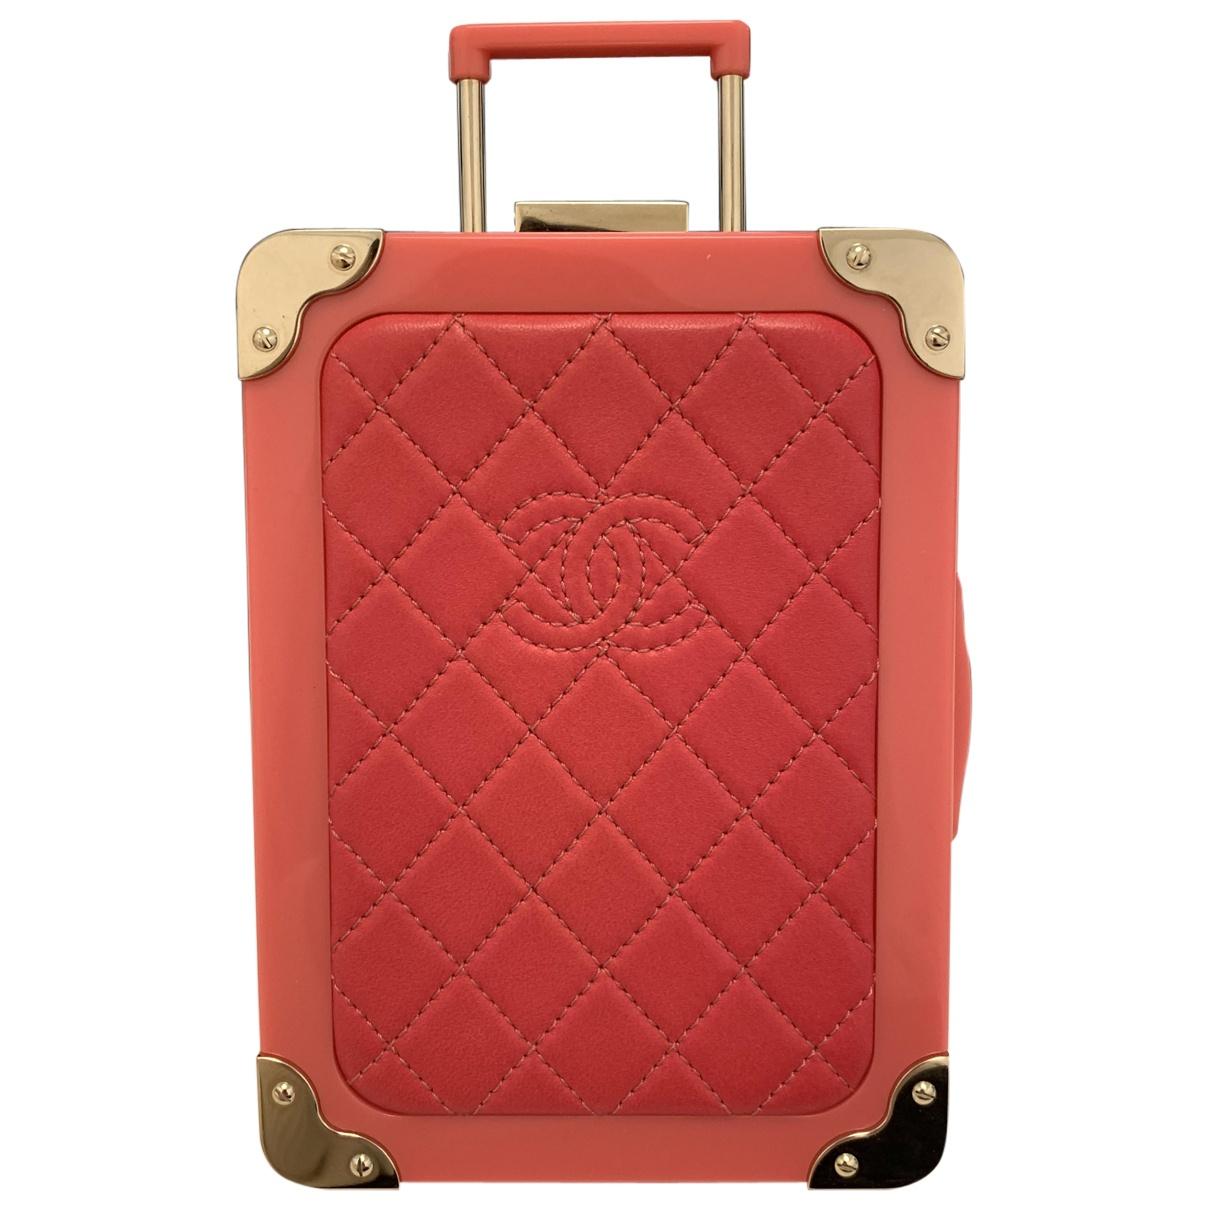 chanel luggage pink  Chanel luggage, Chanel bag, Chanel